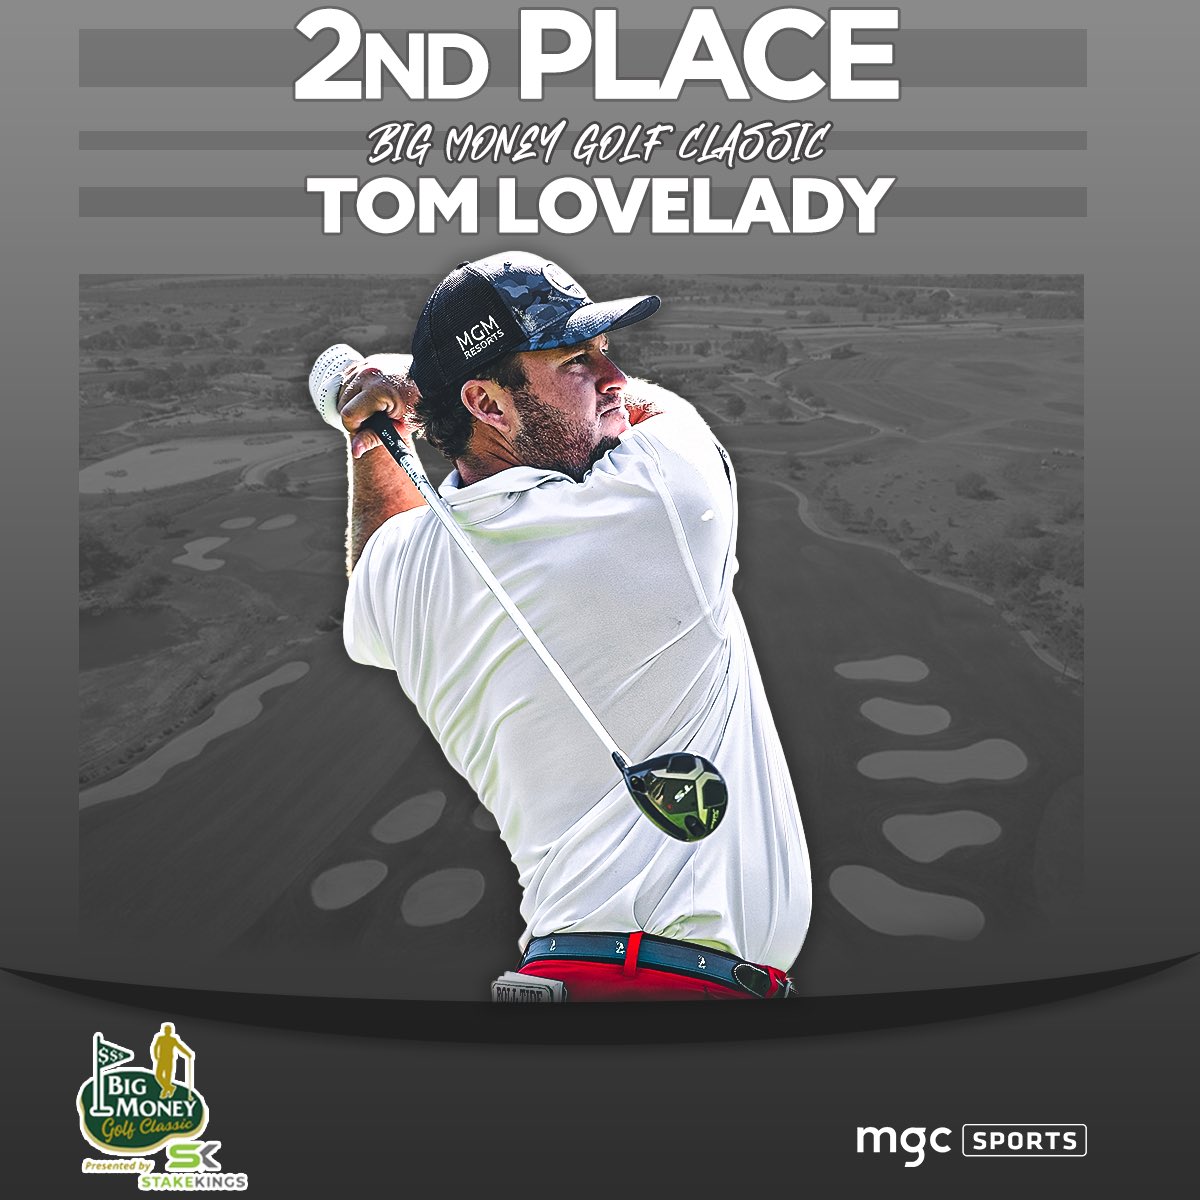 Congrats @TomLovelady25 on your 2nd place finish! #MGCSports #FullContactMgmt